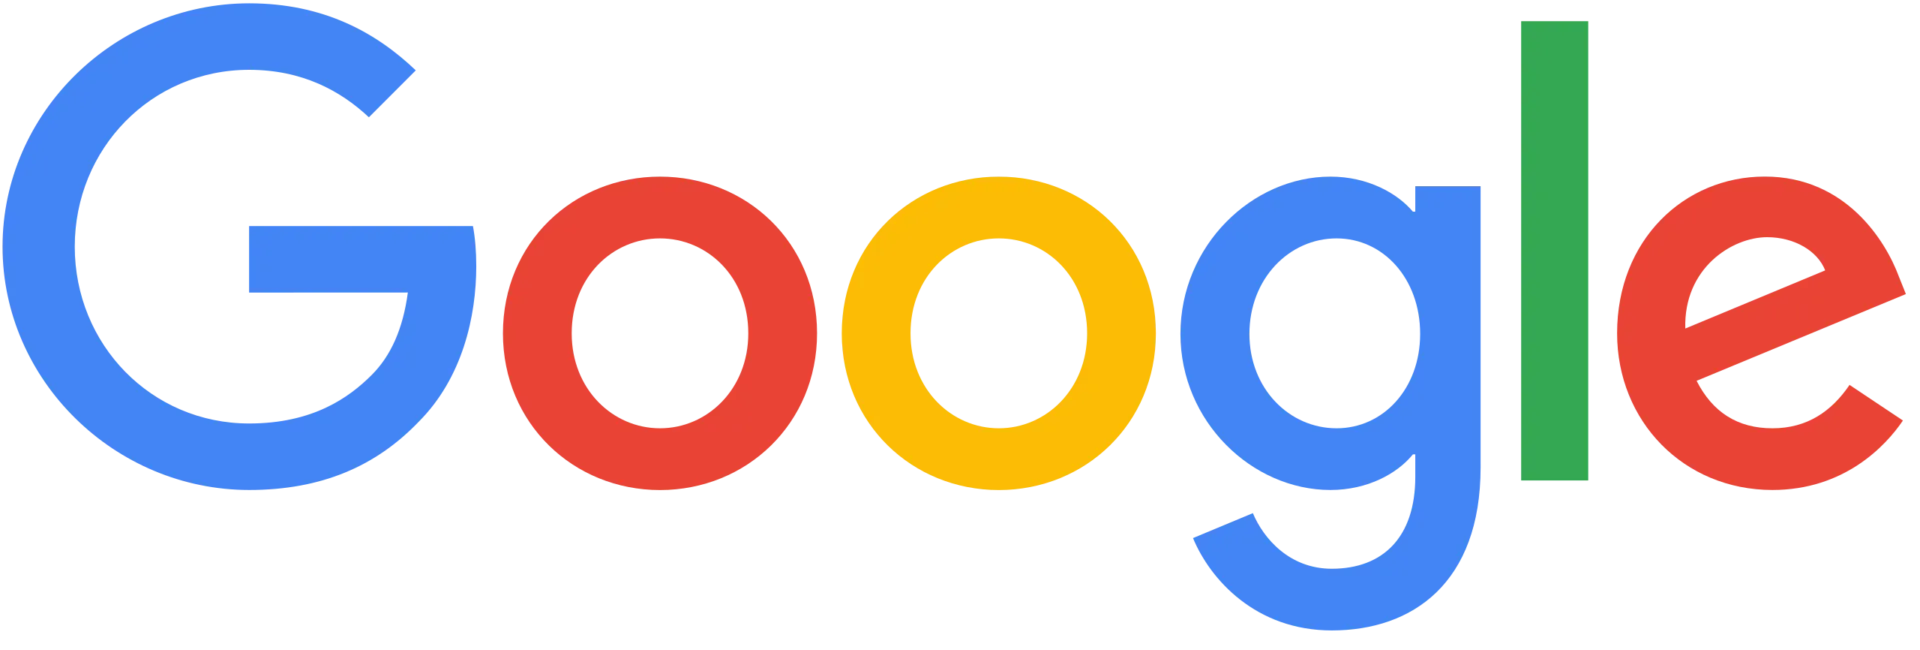 google-2015-logo-svg-1692268429